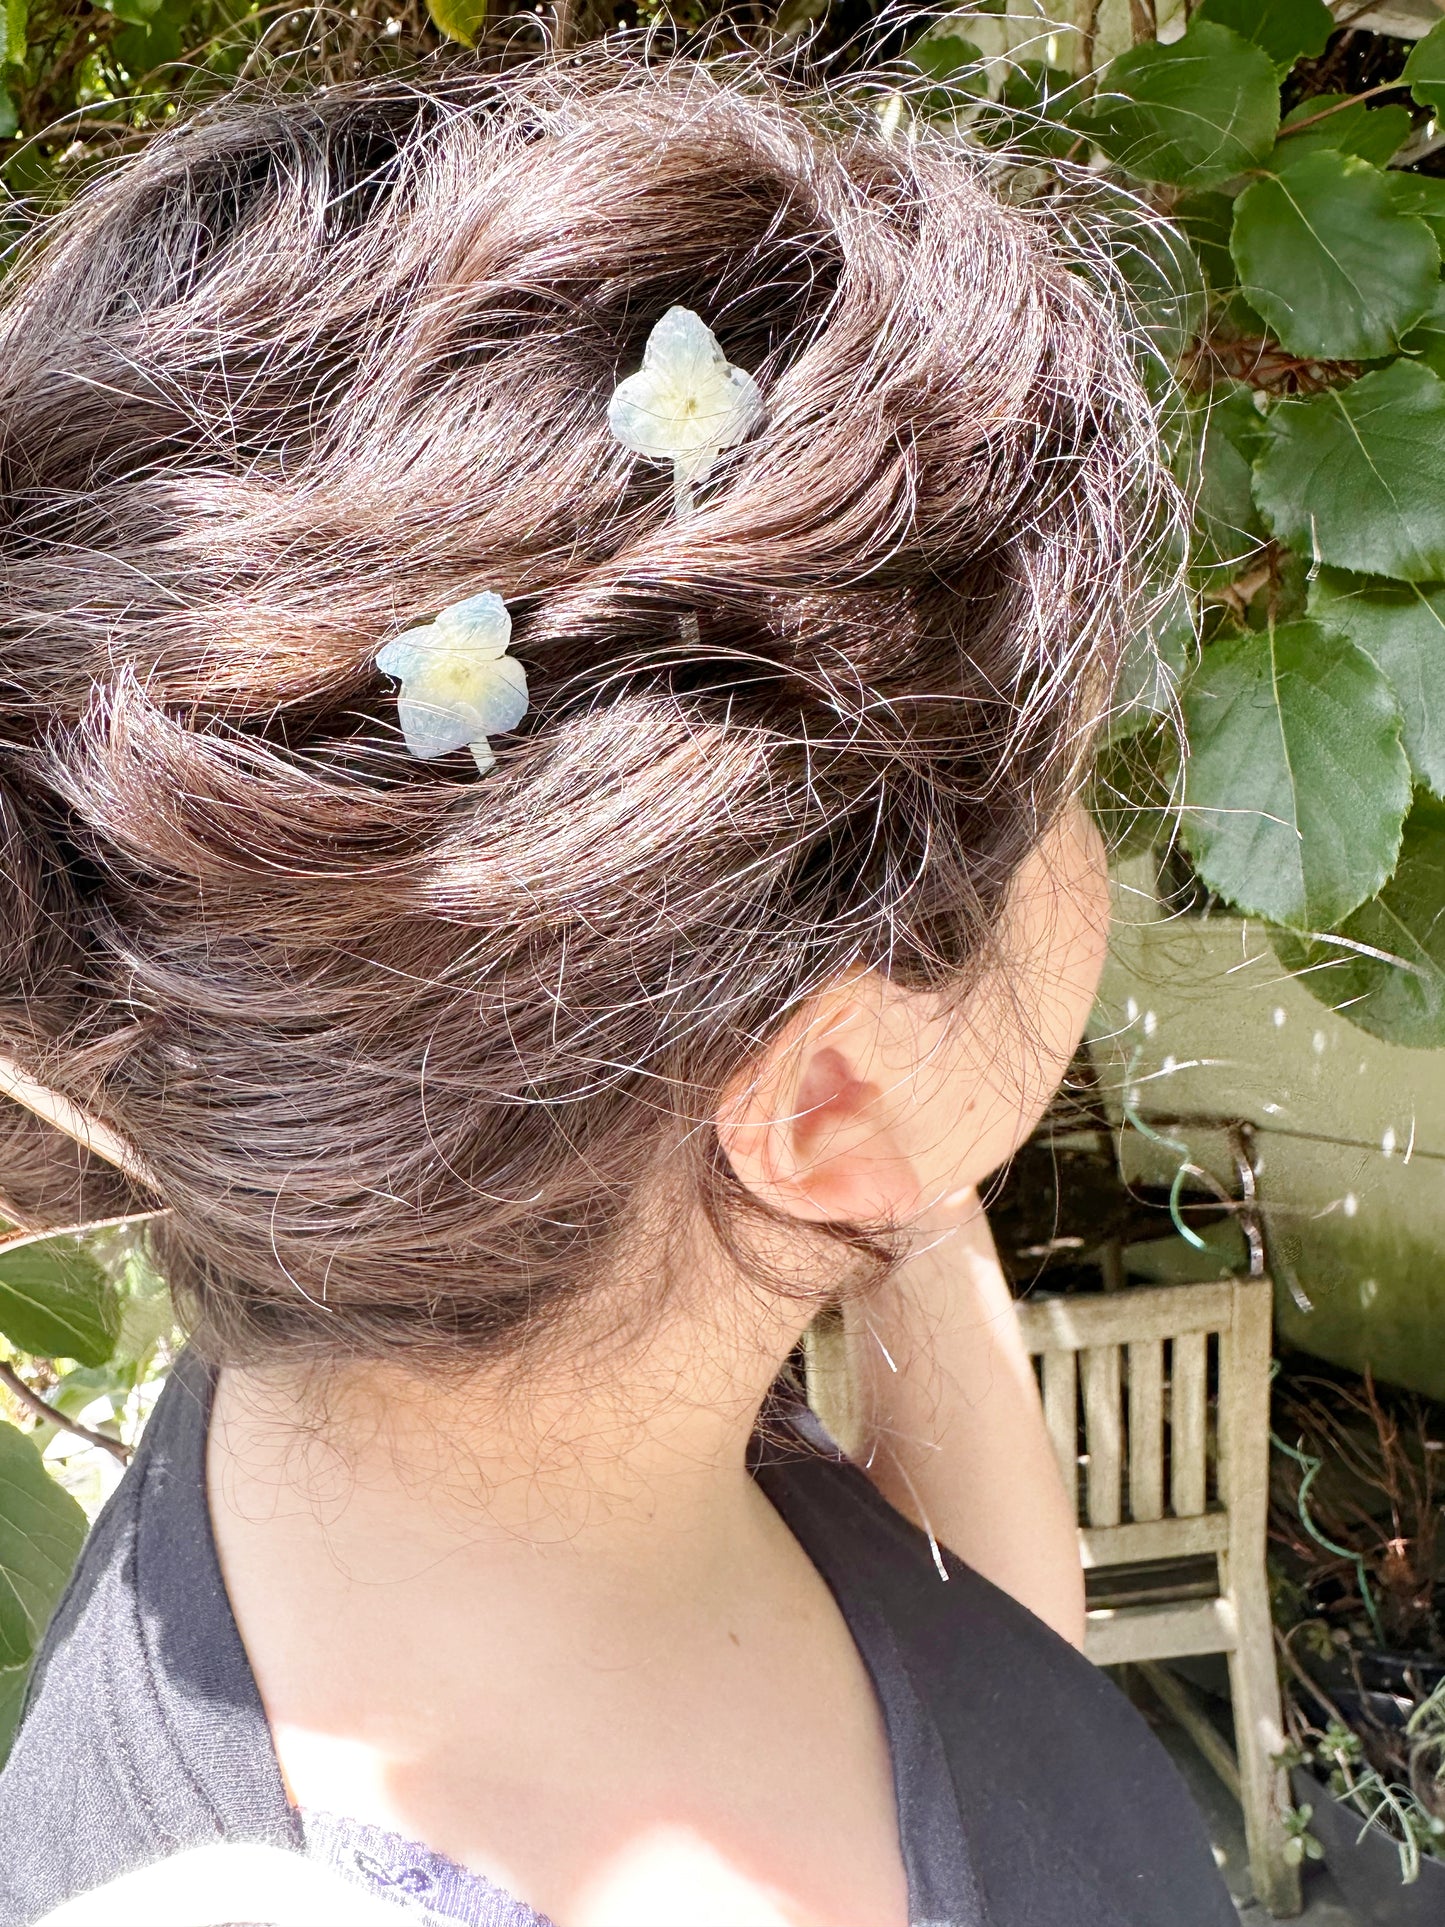 Flower Hair Pins (Set of 2)